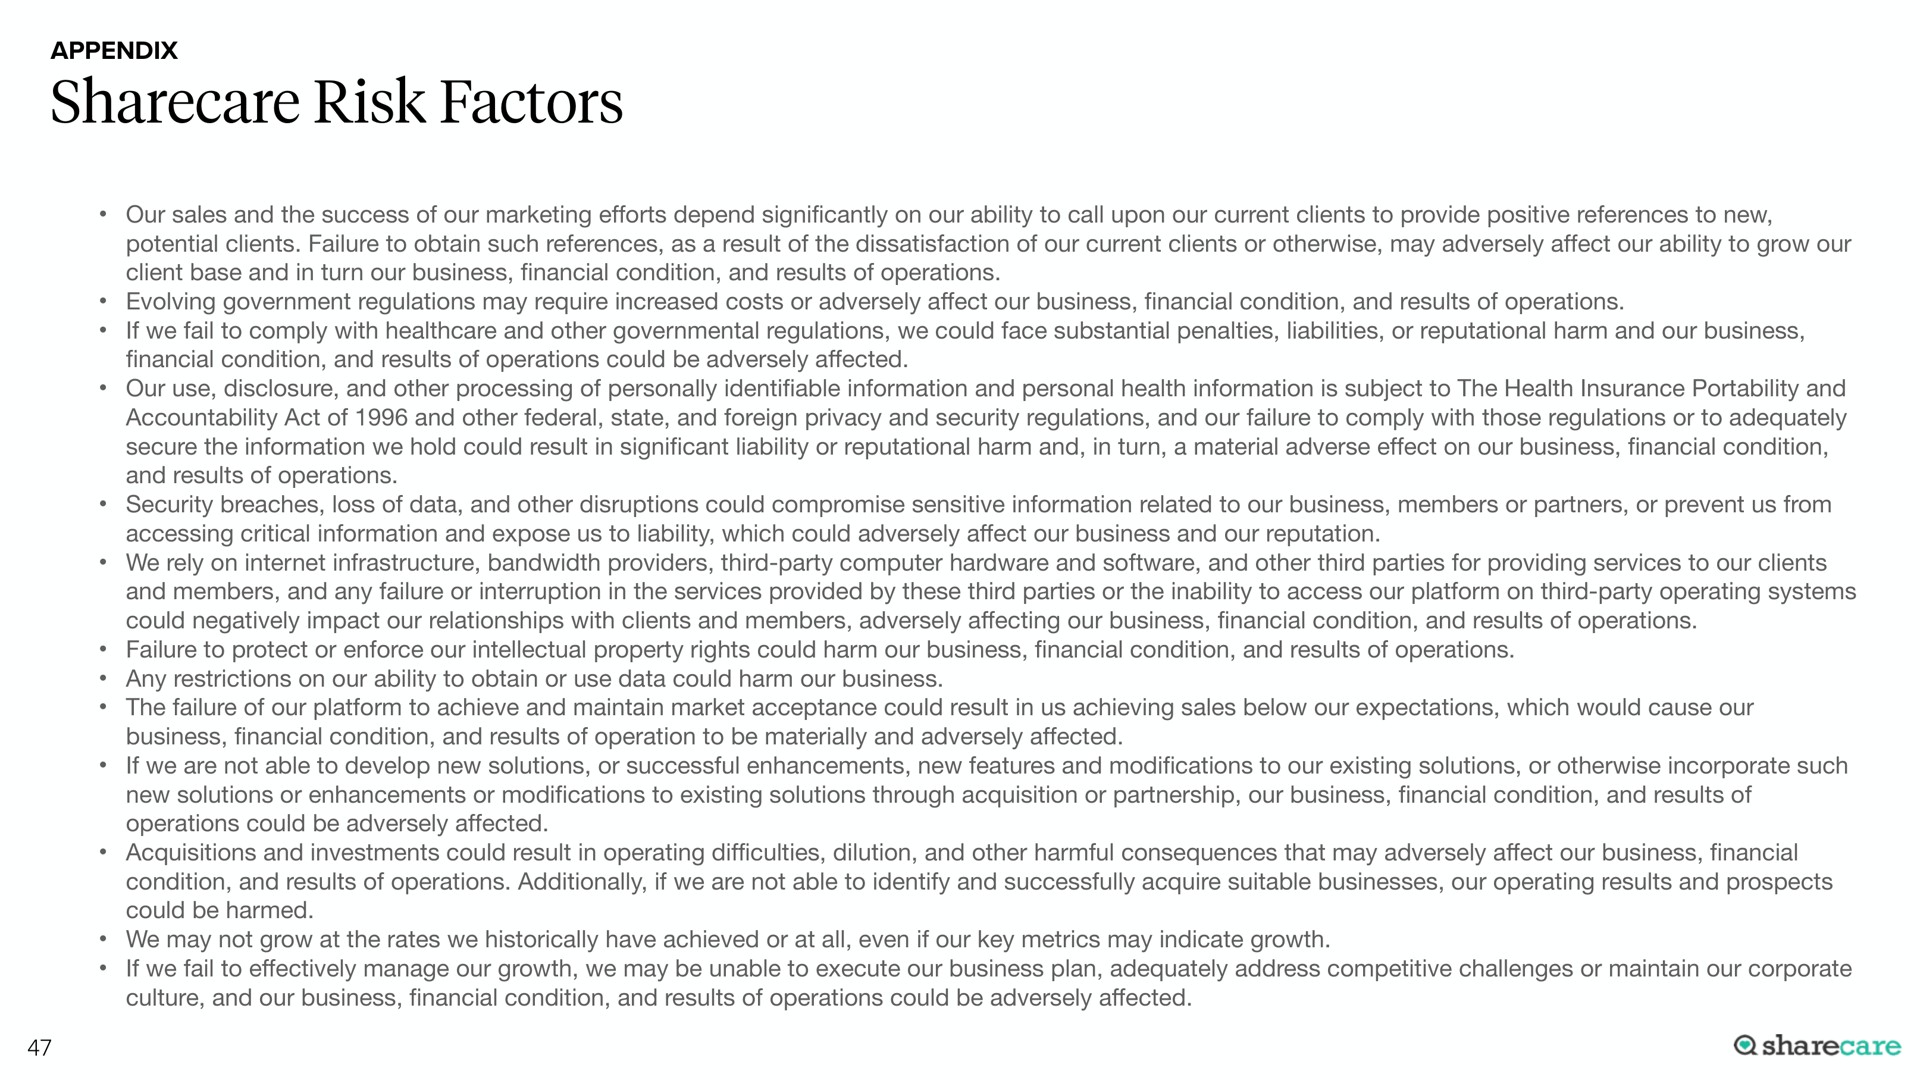 risk factors | Sharecare